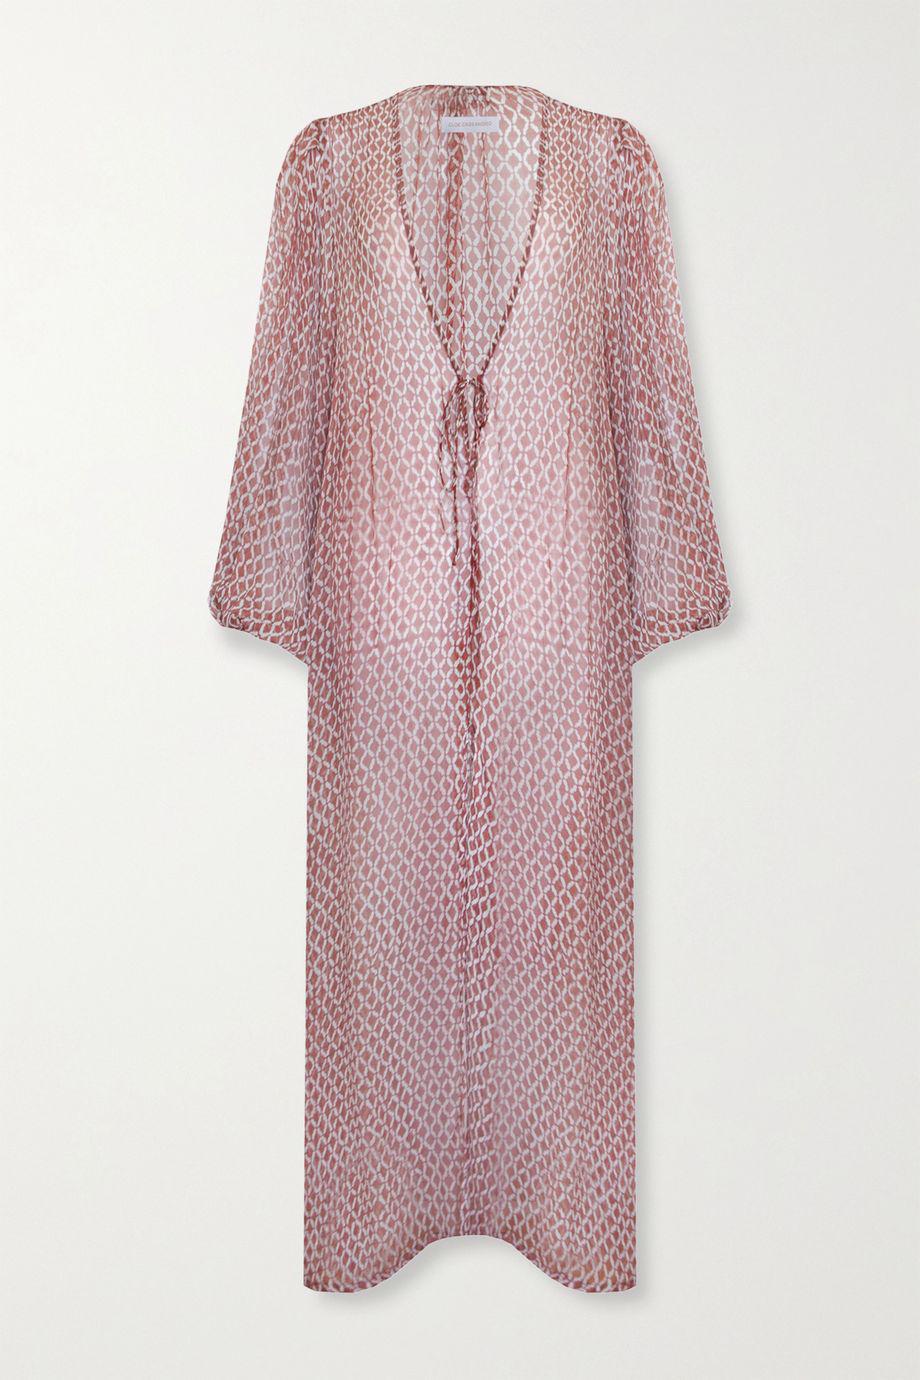 + NET SUSTAIN Lea printed silk maxi dress by CLOE CASSANDRO